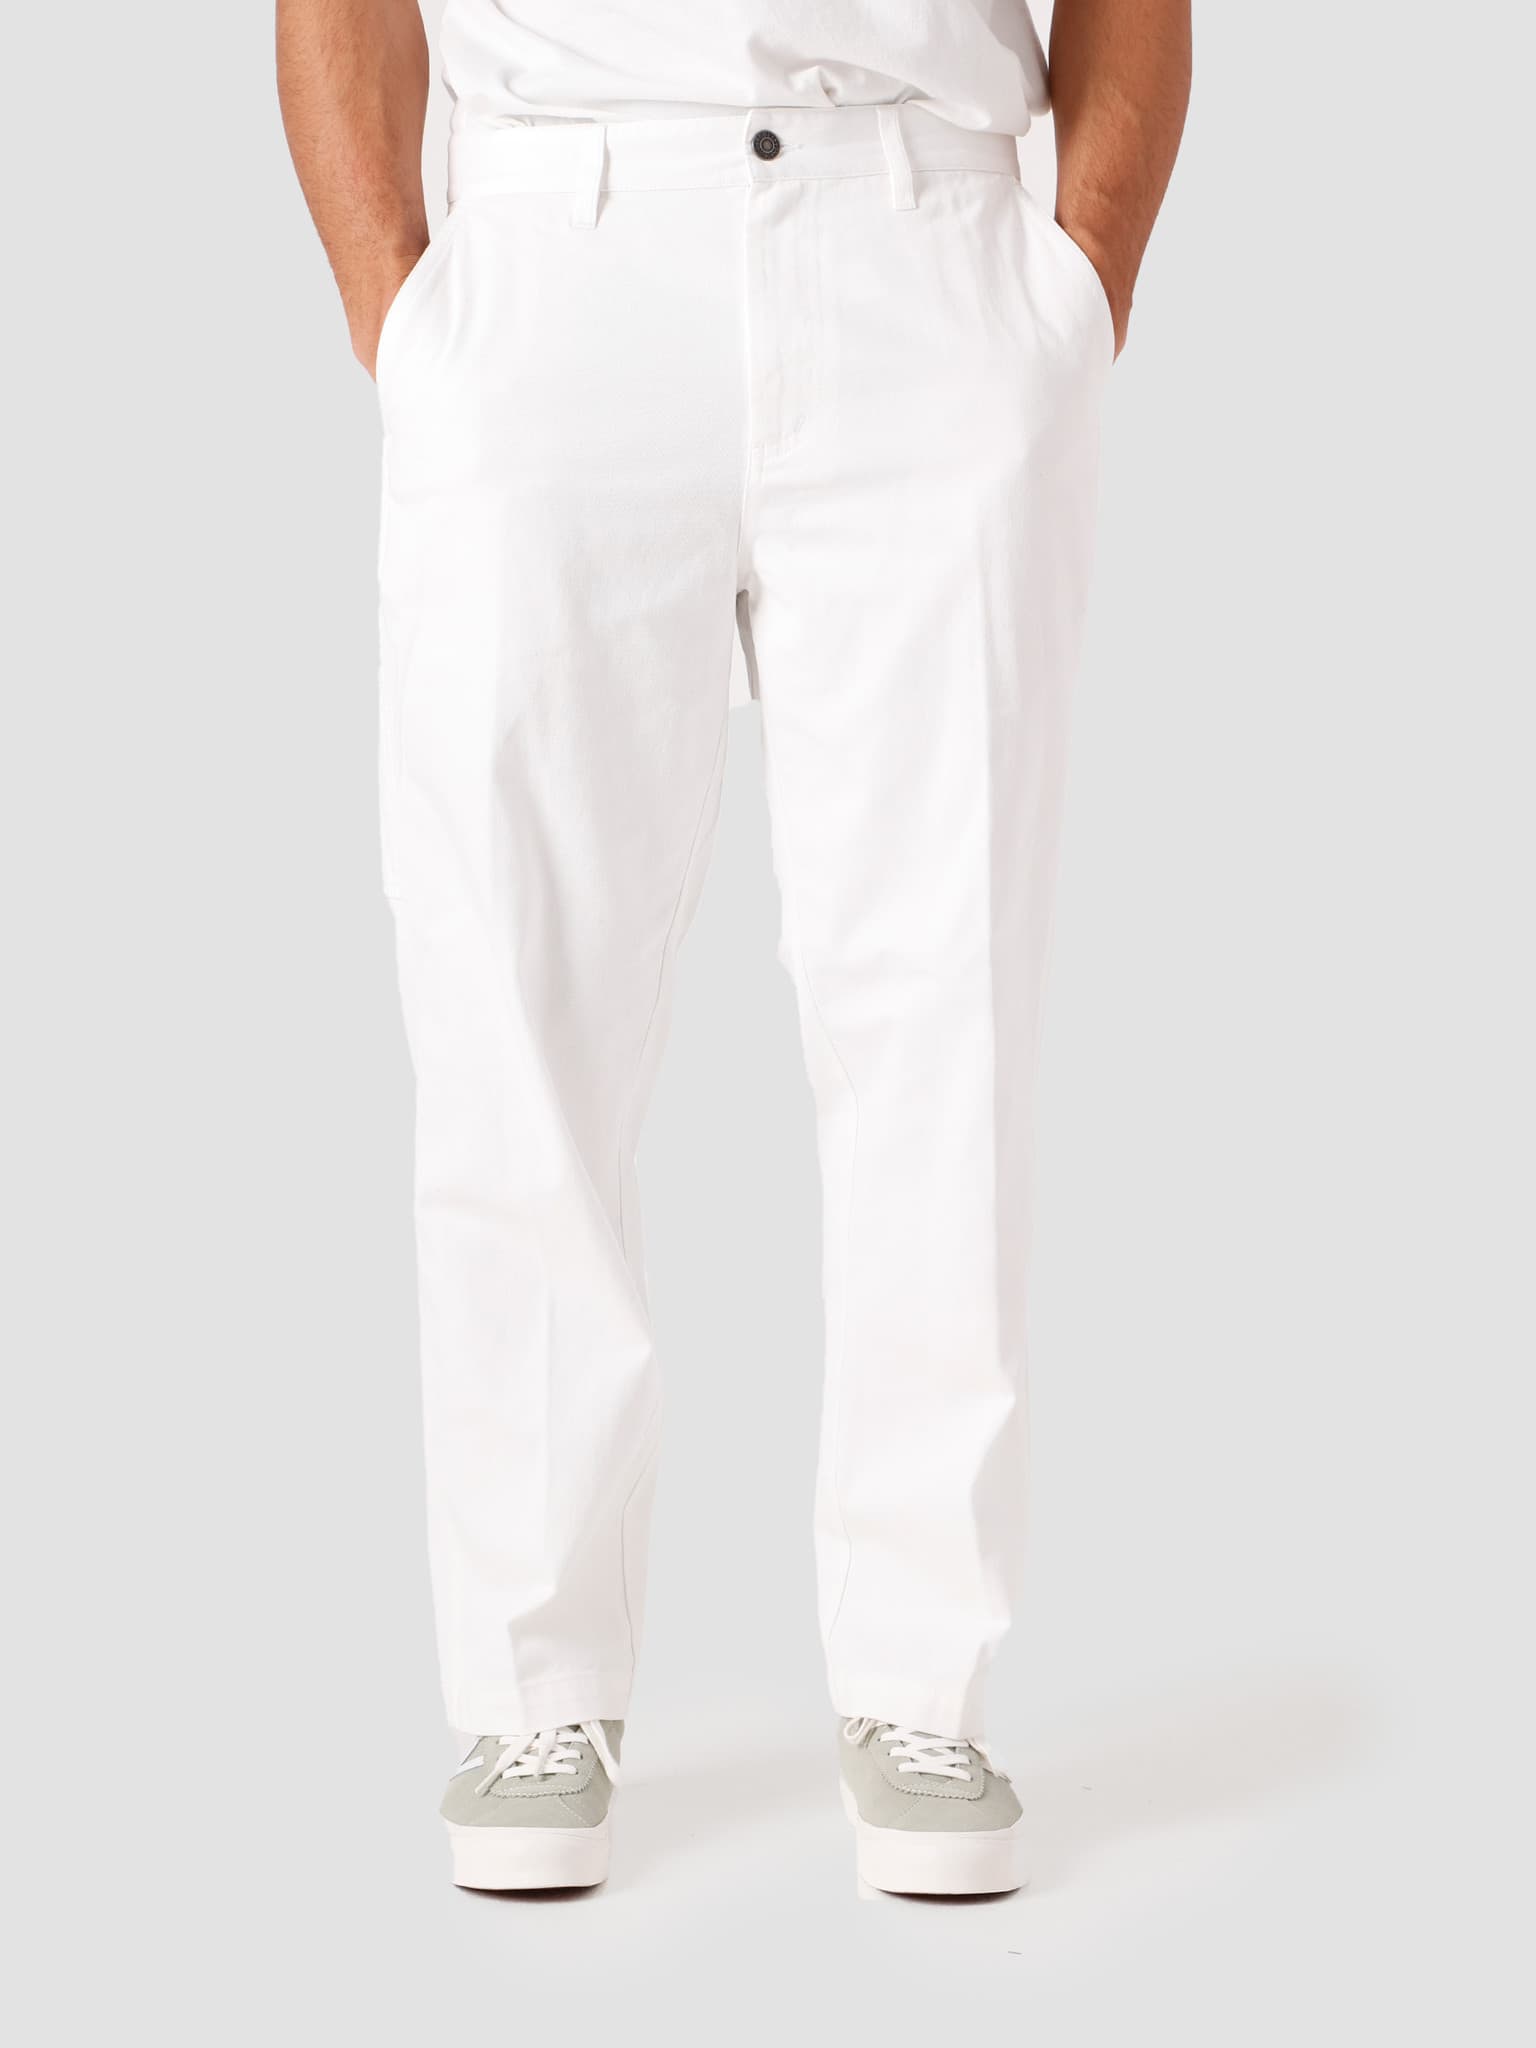 Studio Citizen Carpenter Pants in White and Stone Denim - CITIZEN VINTAGE